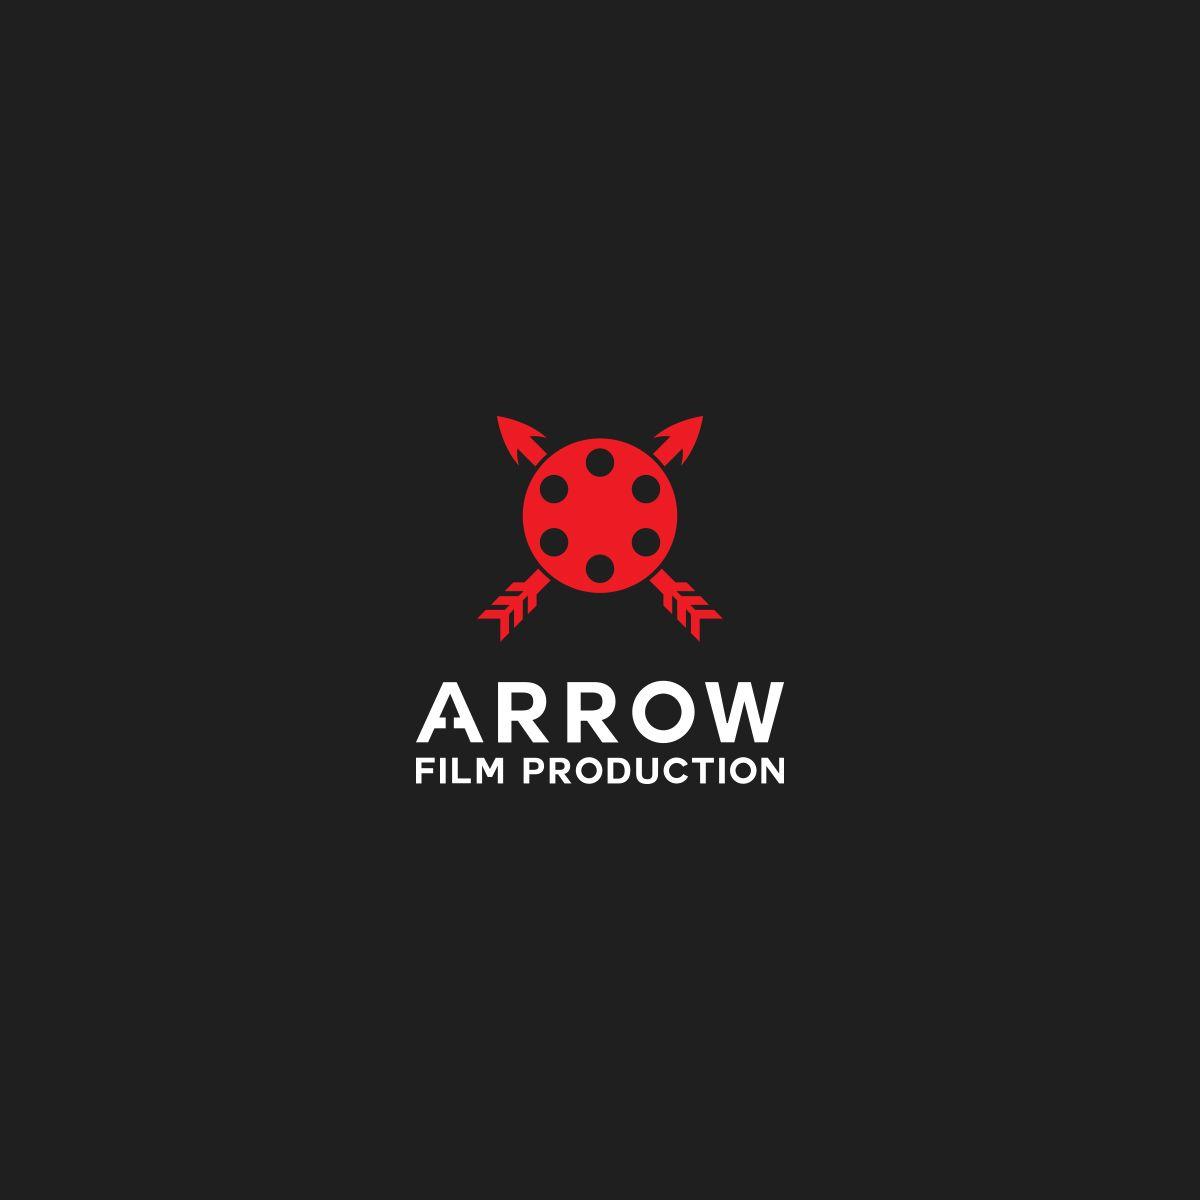 Poppy Movie Logo - Modern, Professional, Movie Production Logo Design for ARROW FILM ...